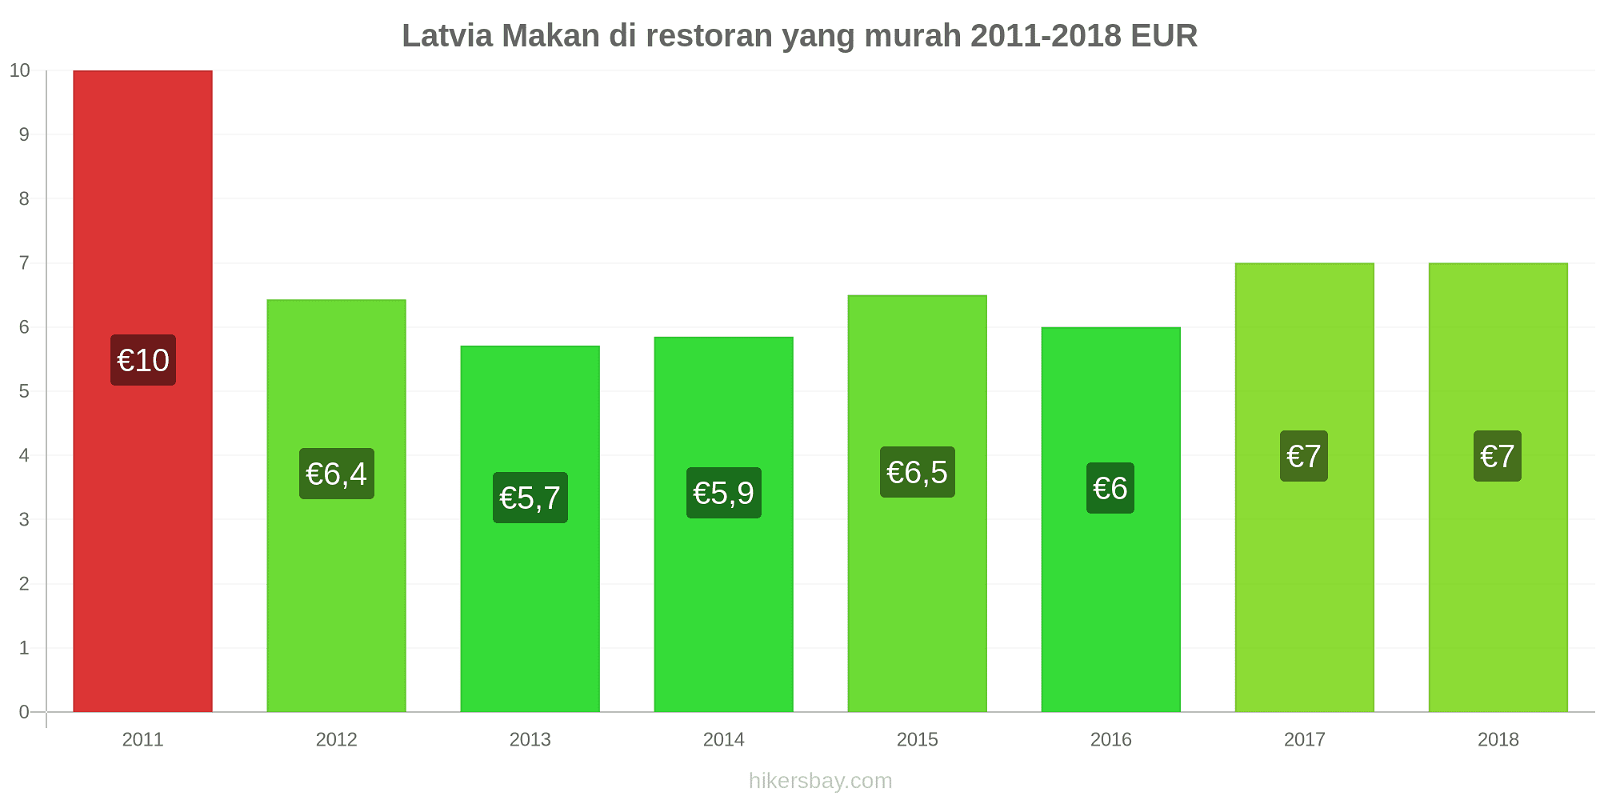 Latvia perubahan harga Makan di restoran yang terjangkau hikersbay.com